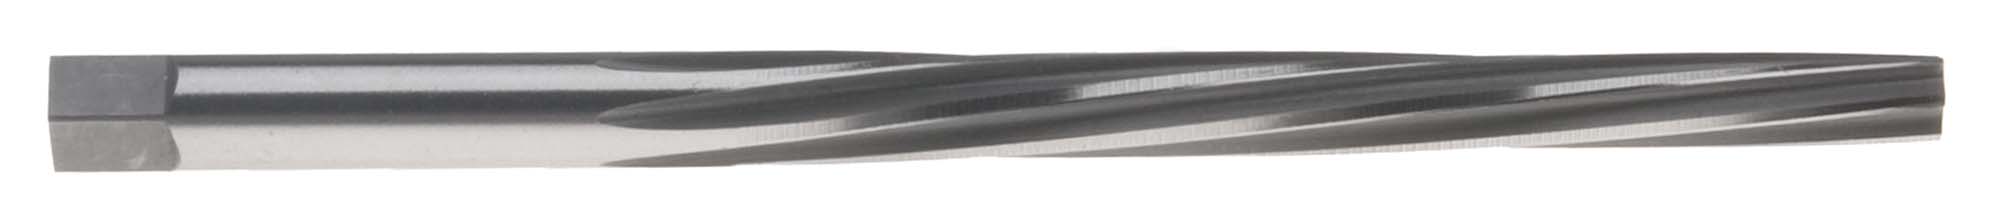 #4/0 Spiral Flute Taper Pin Reamer, High Speed Steel